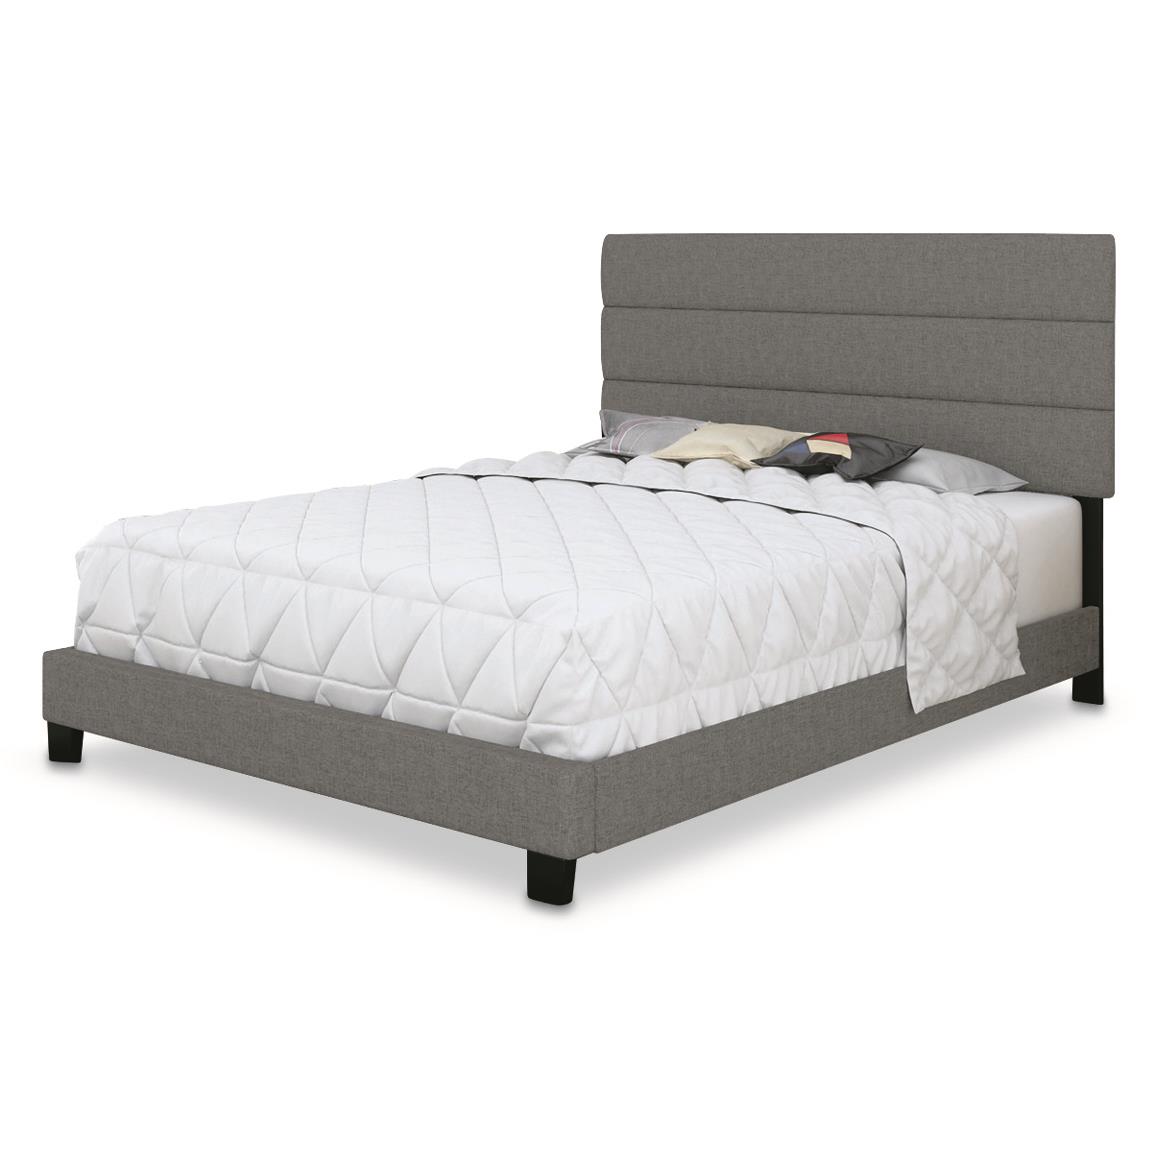 Tranquil Sleep Linen Horizontal Channel Platform Bed Frame, Gray